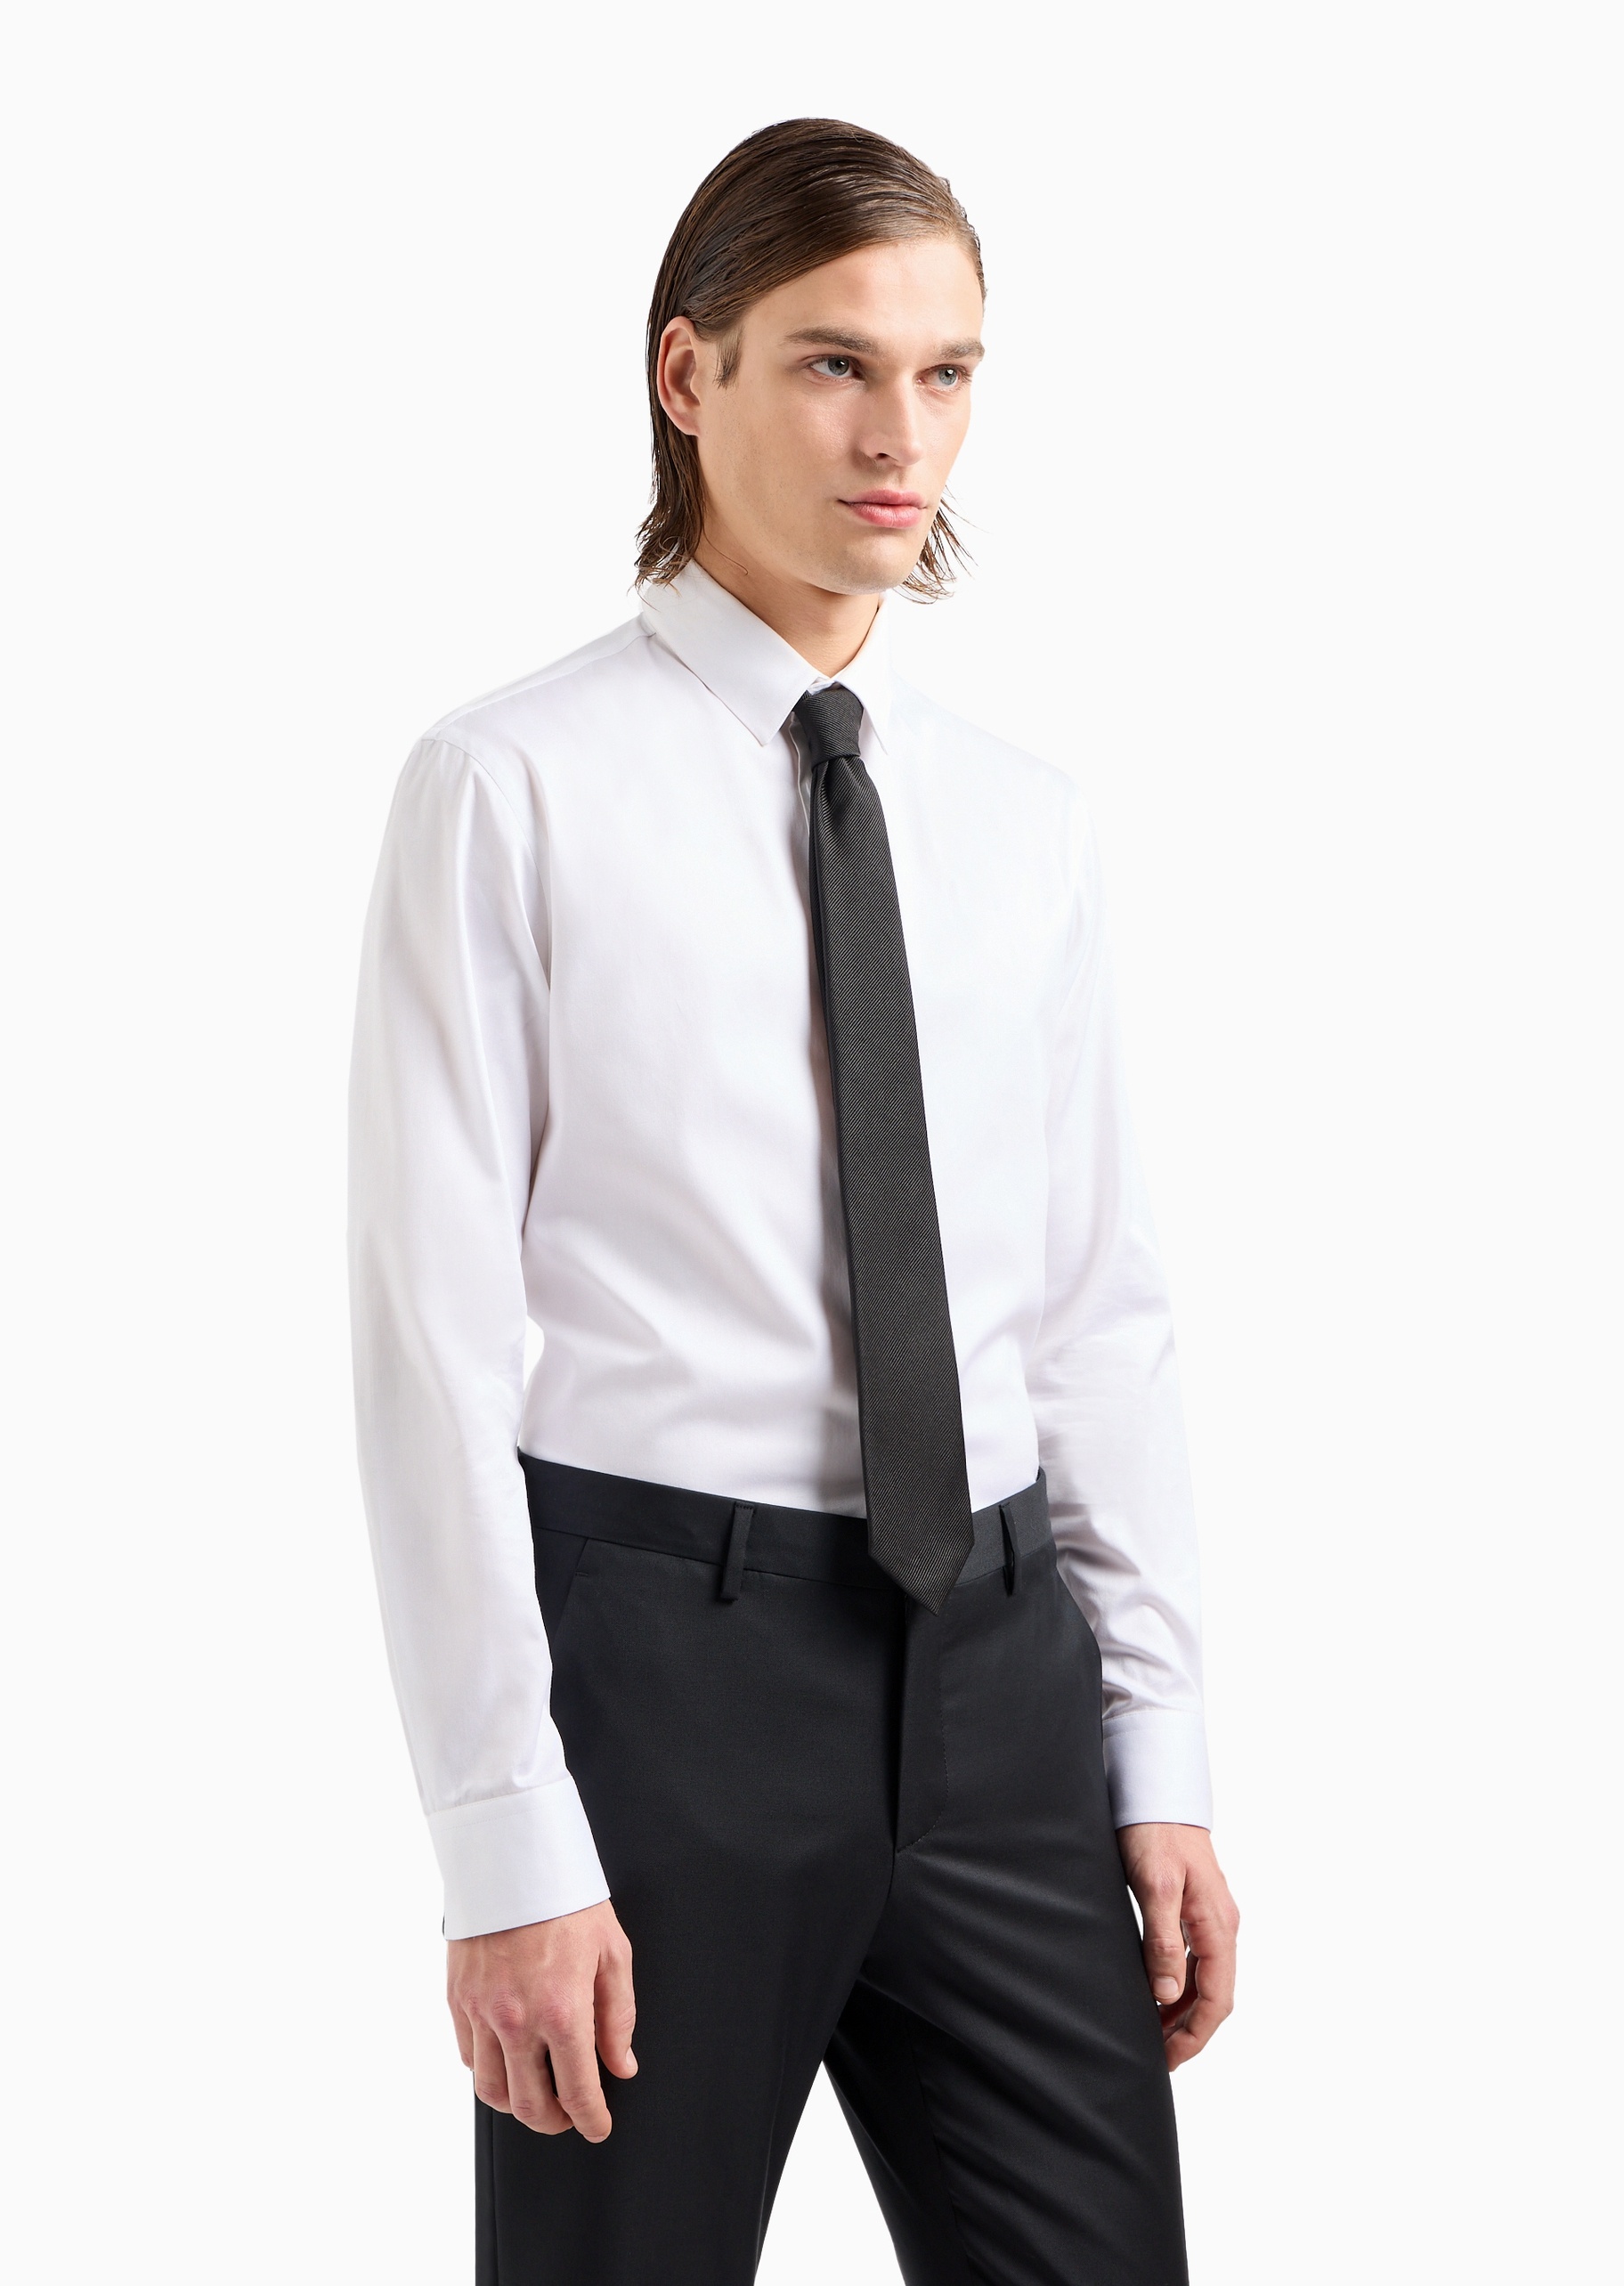 Giorgio Armani 男士桑蚕丝箭头型纯色细斜纹领带